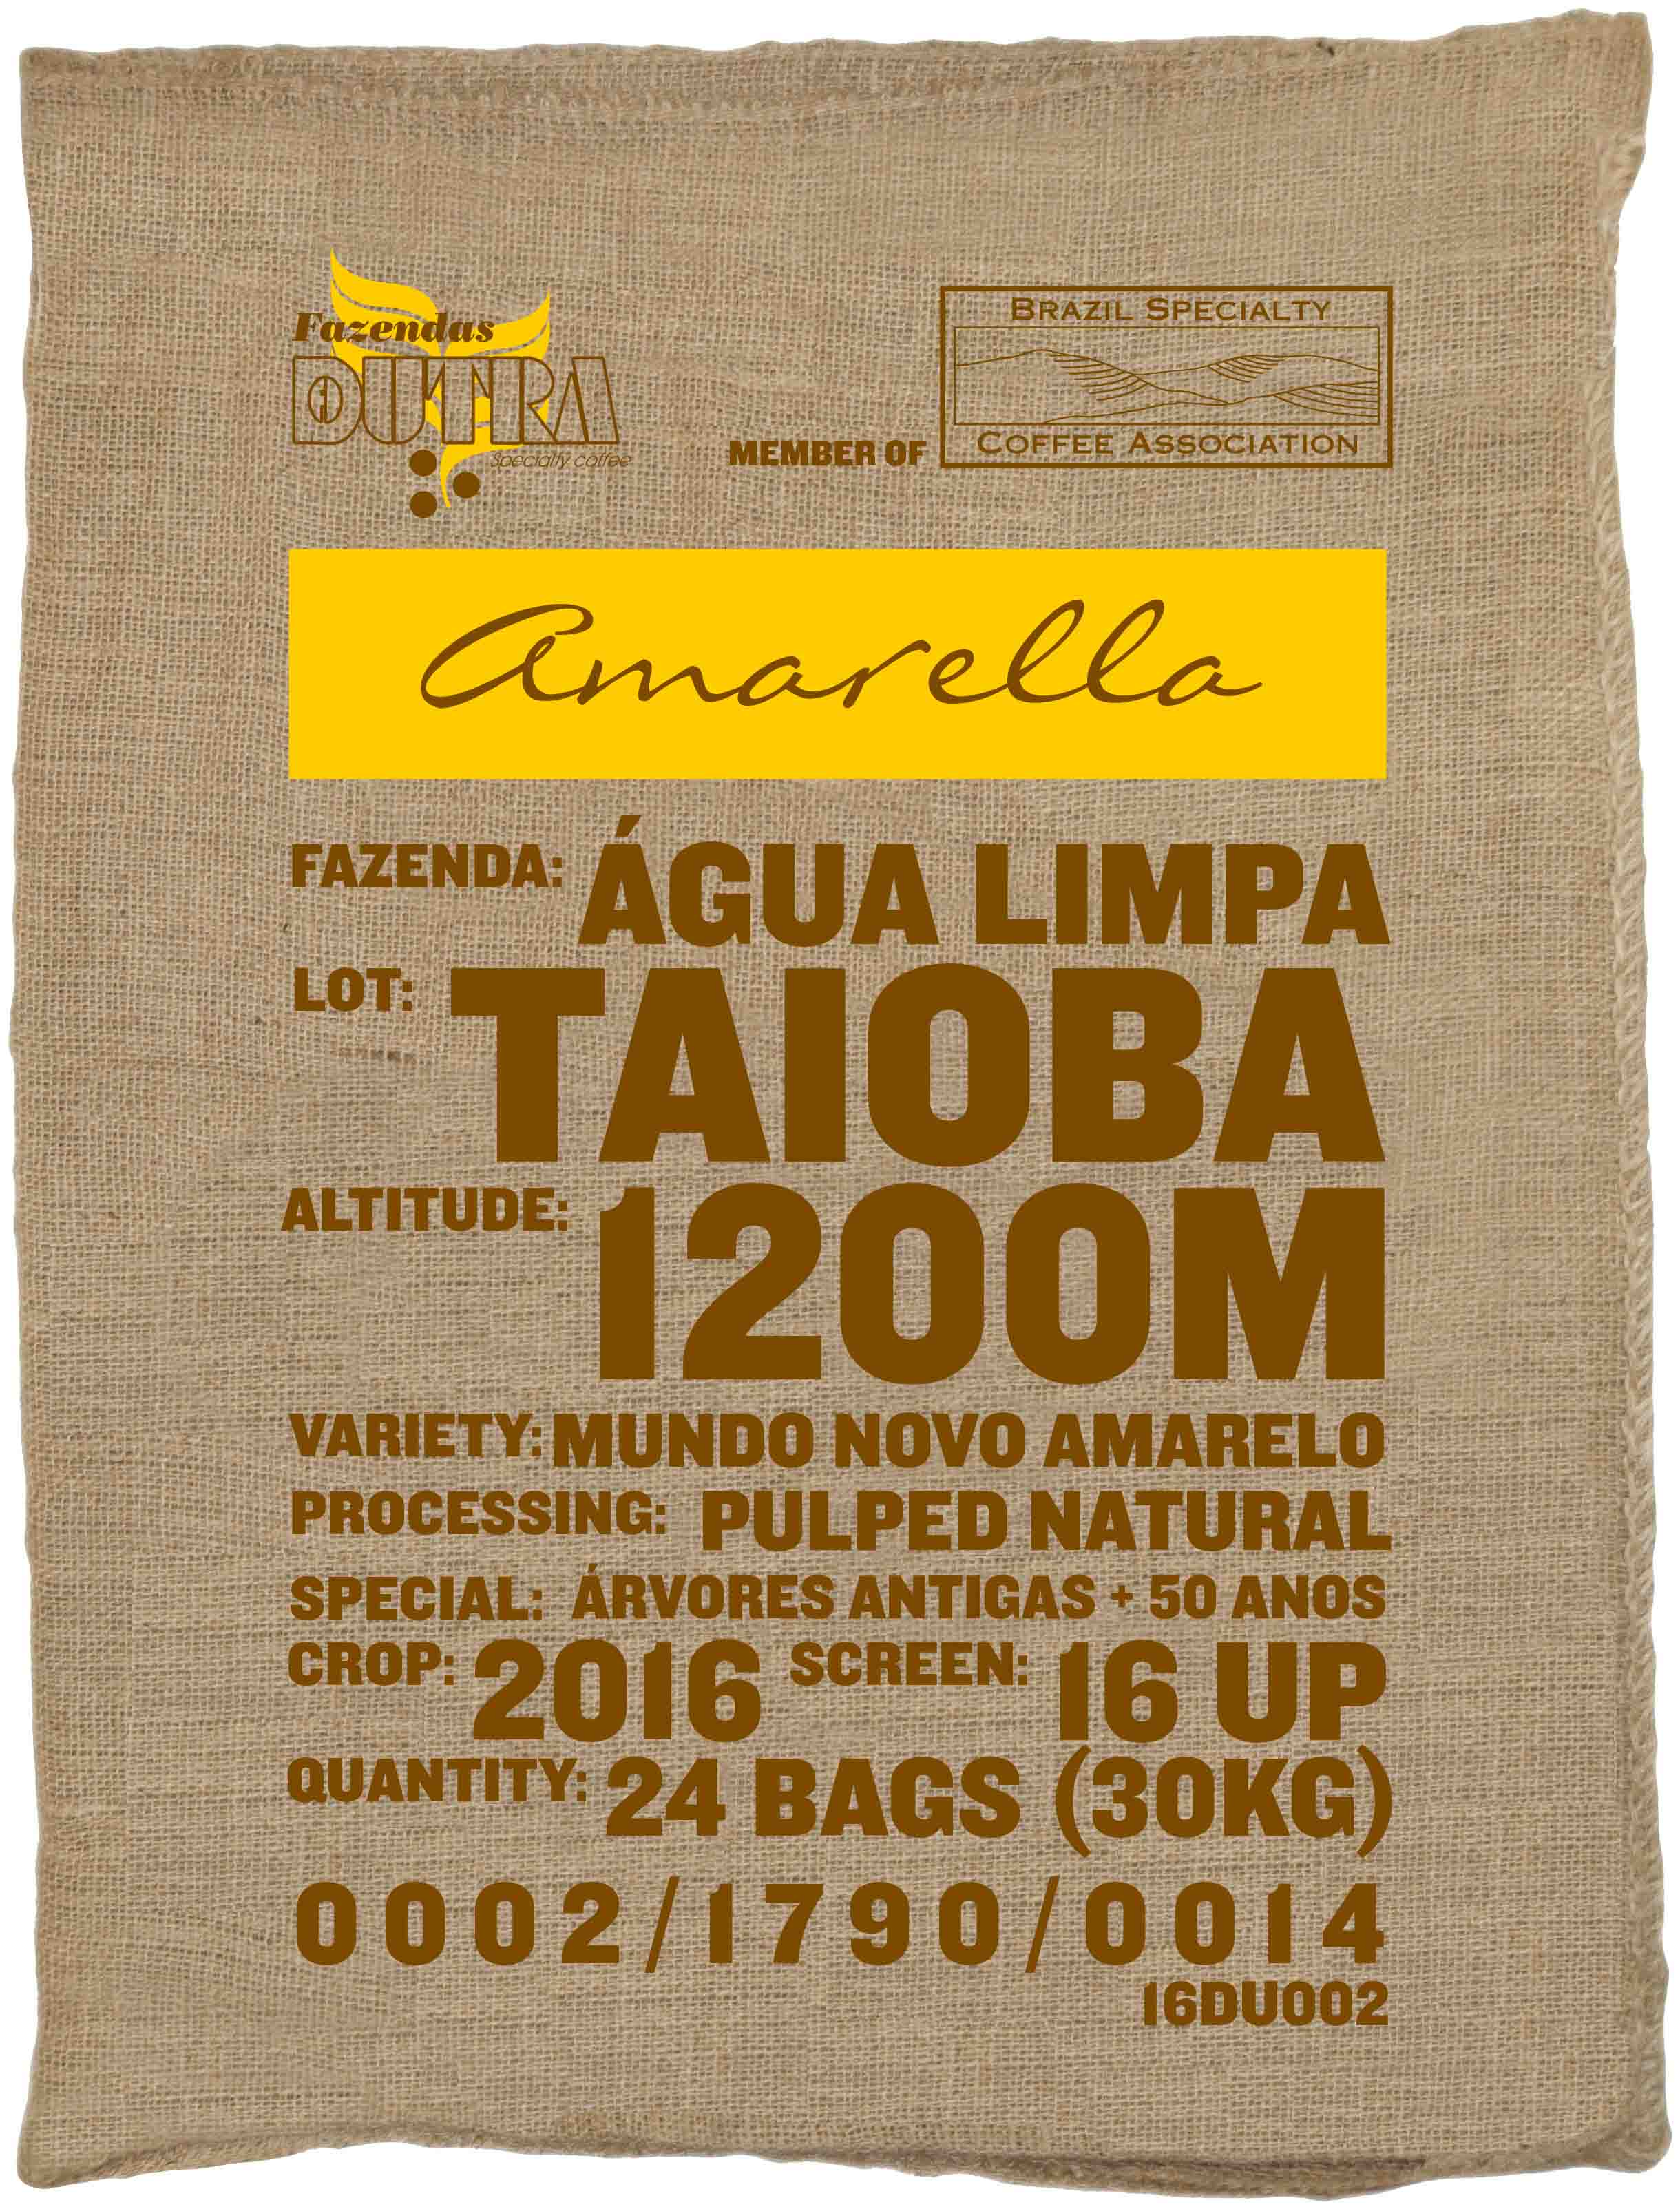 Ein Rohkaffeesack amarella Parzellenkaffee Varietät Mundo Novo amarelo. Fazendas Dutra Lot Taioba.